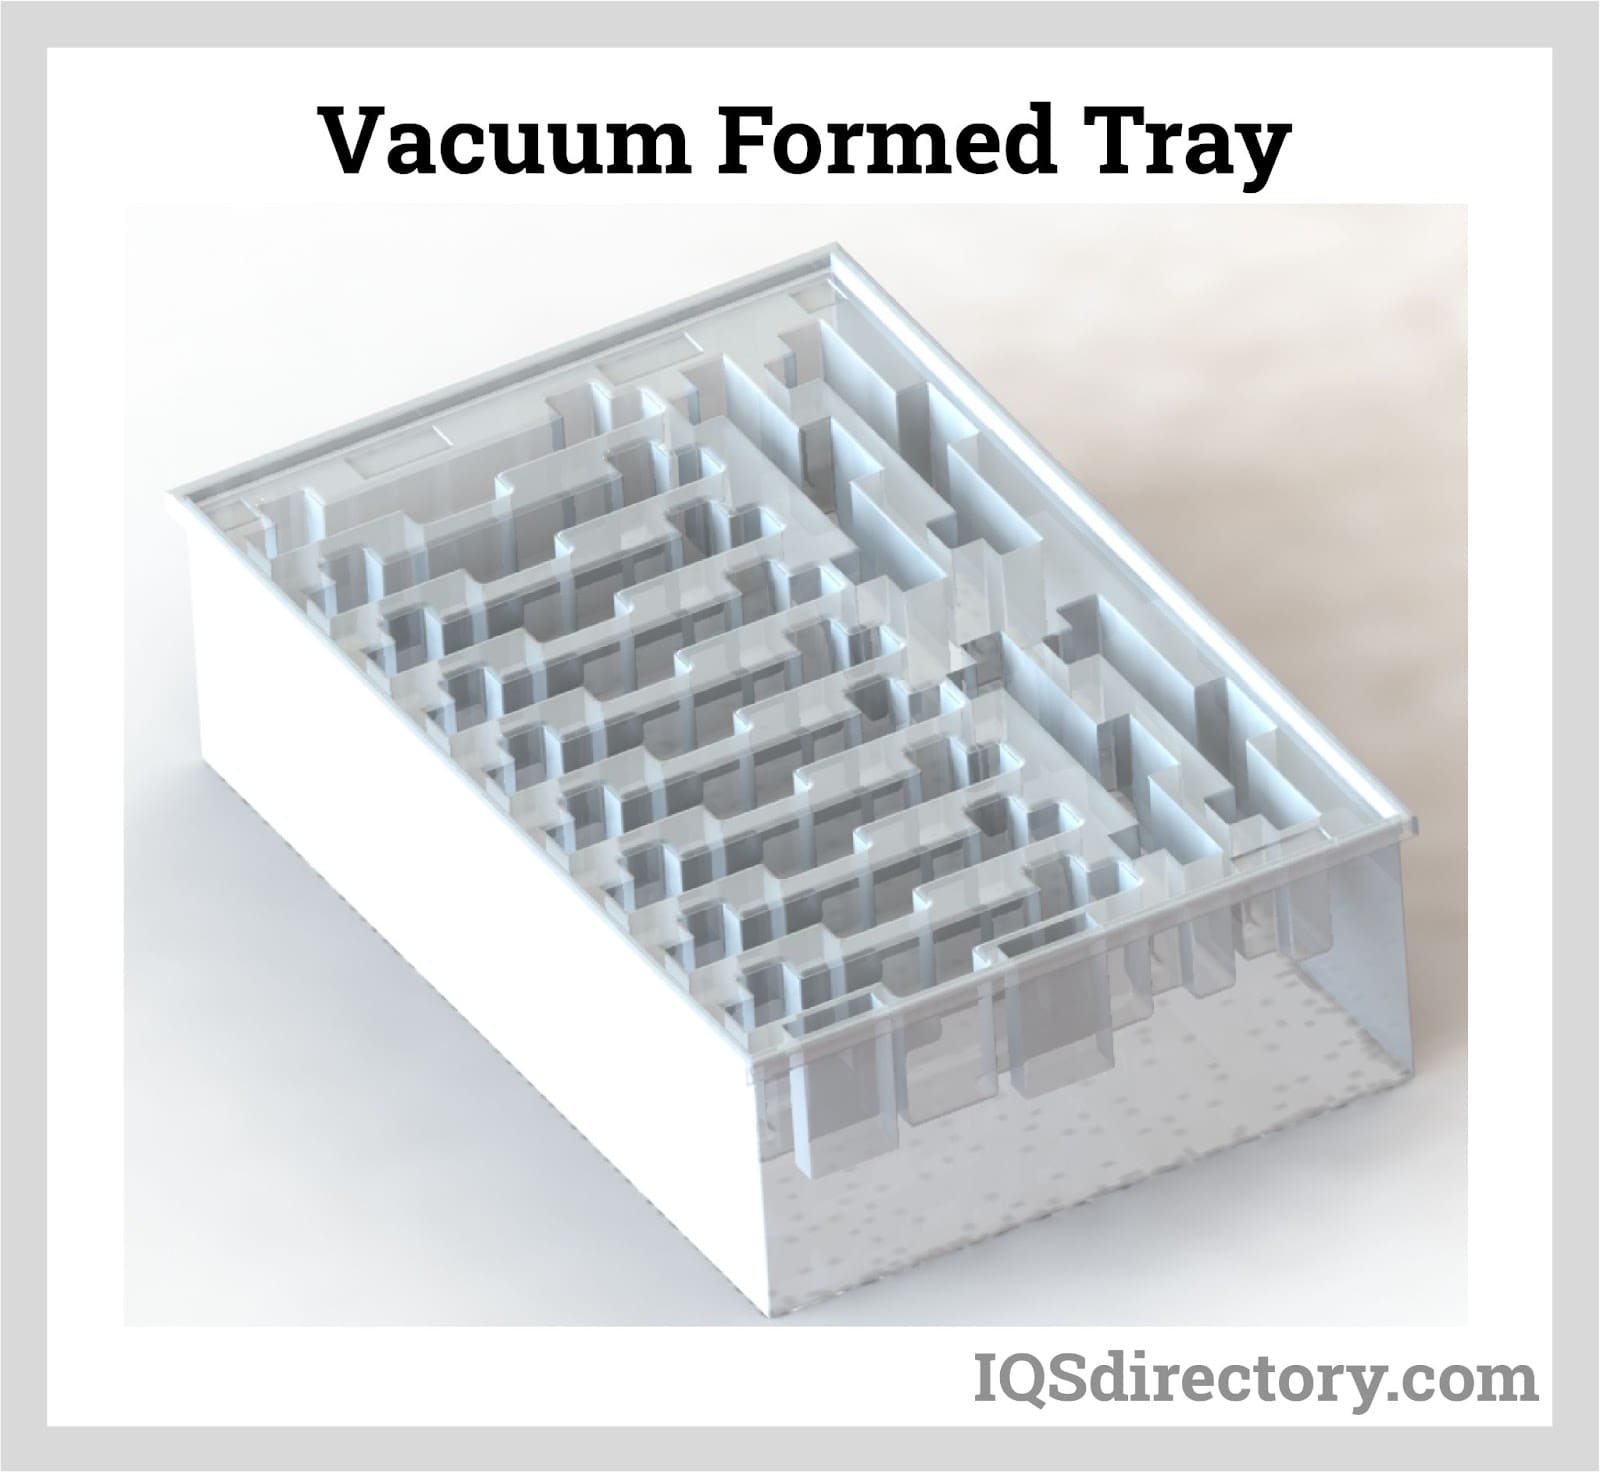 Vacuum Formed Tray